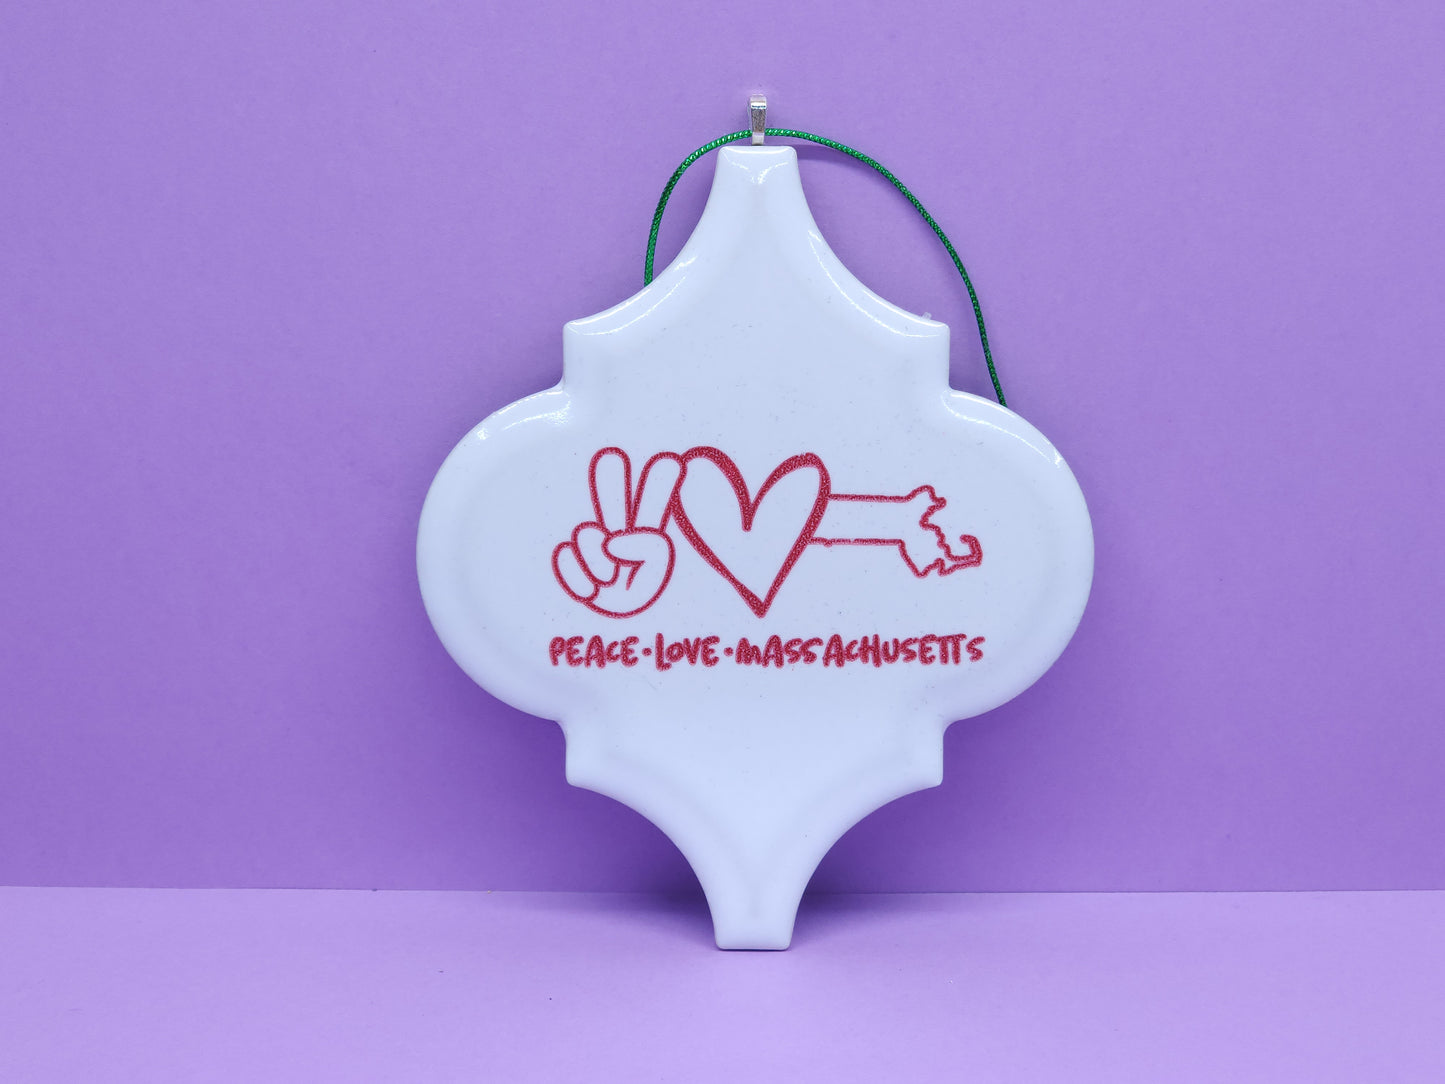 Adorno arabesco lleno de tinta "Paz - Amor - Massachusetts"